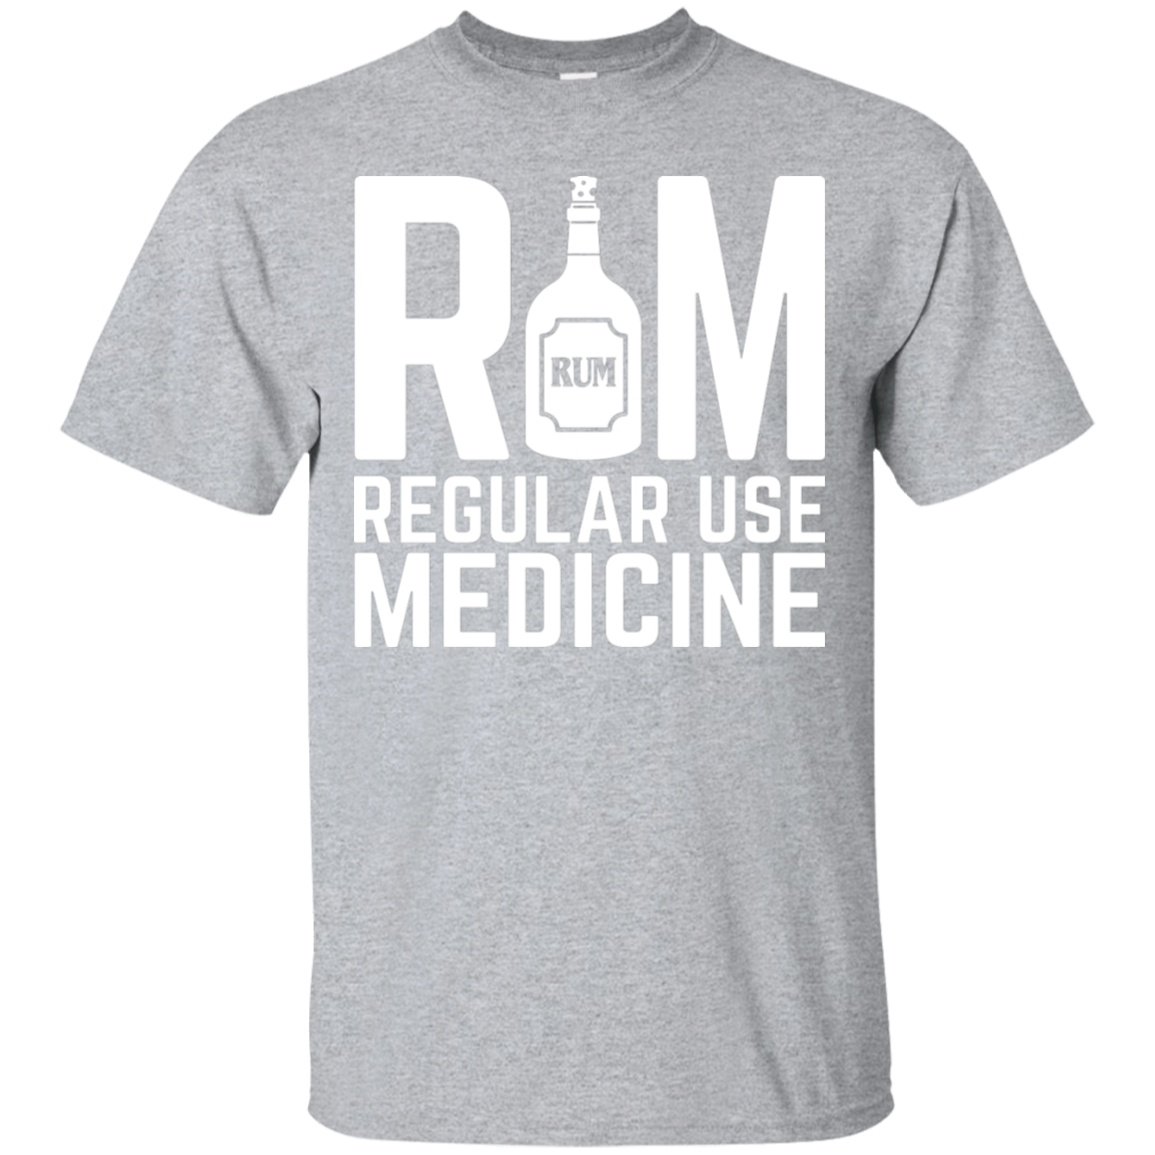 RUM Regular Use Medicine T-Shirt Apparel - The Beer Lodge